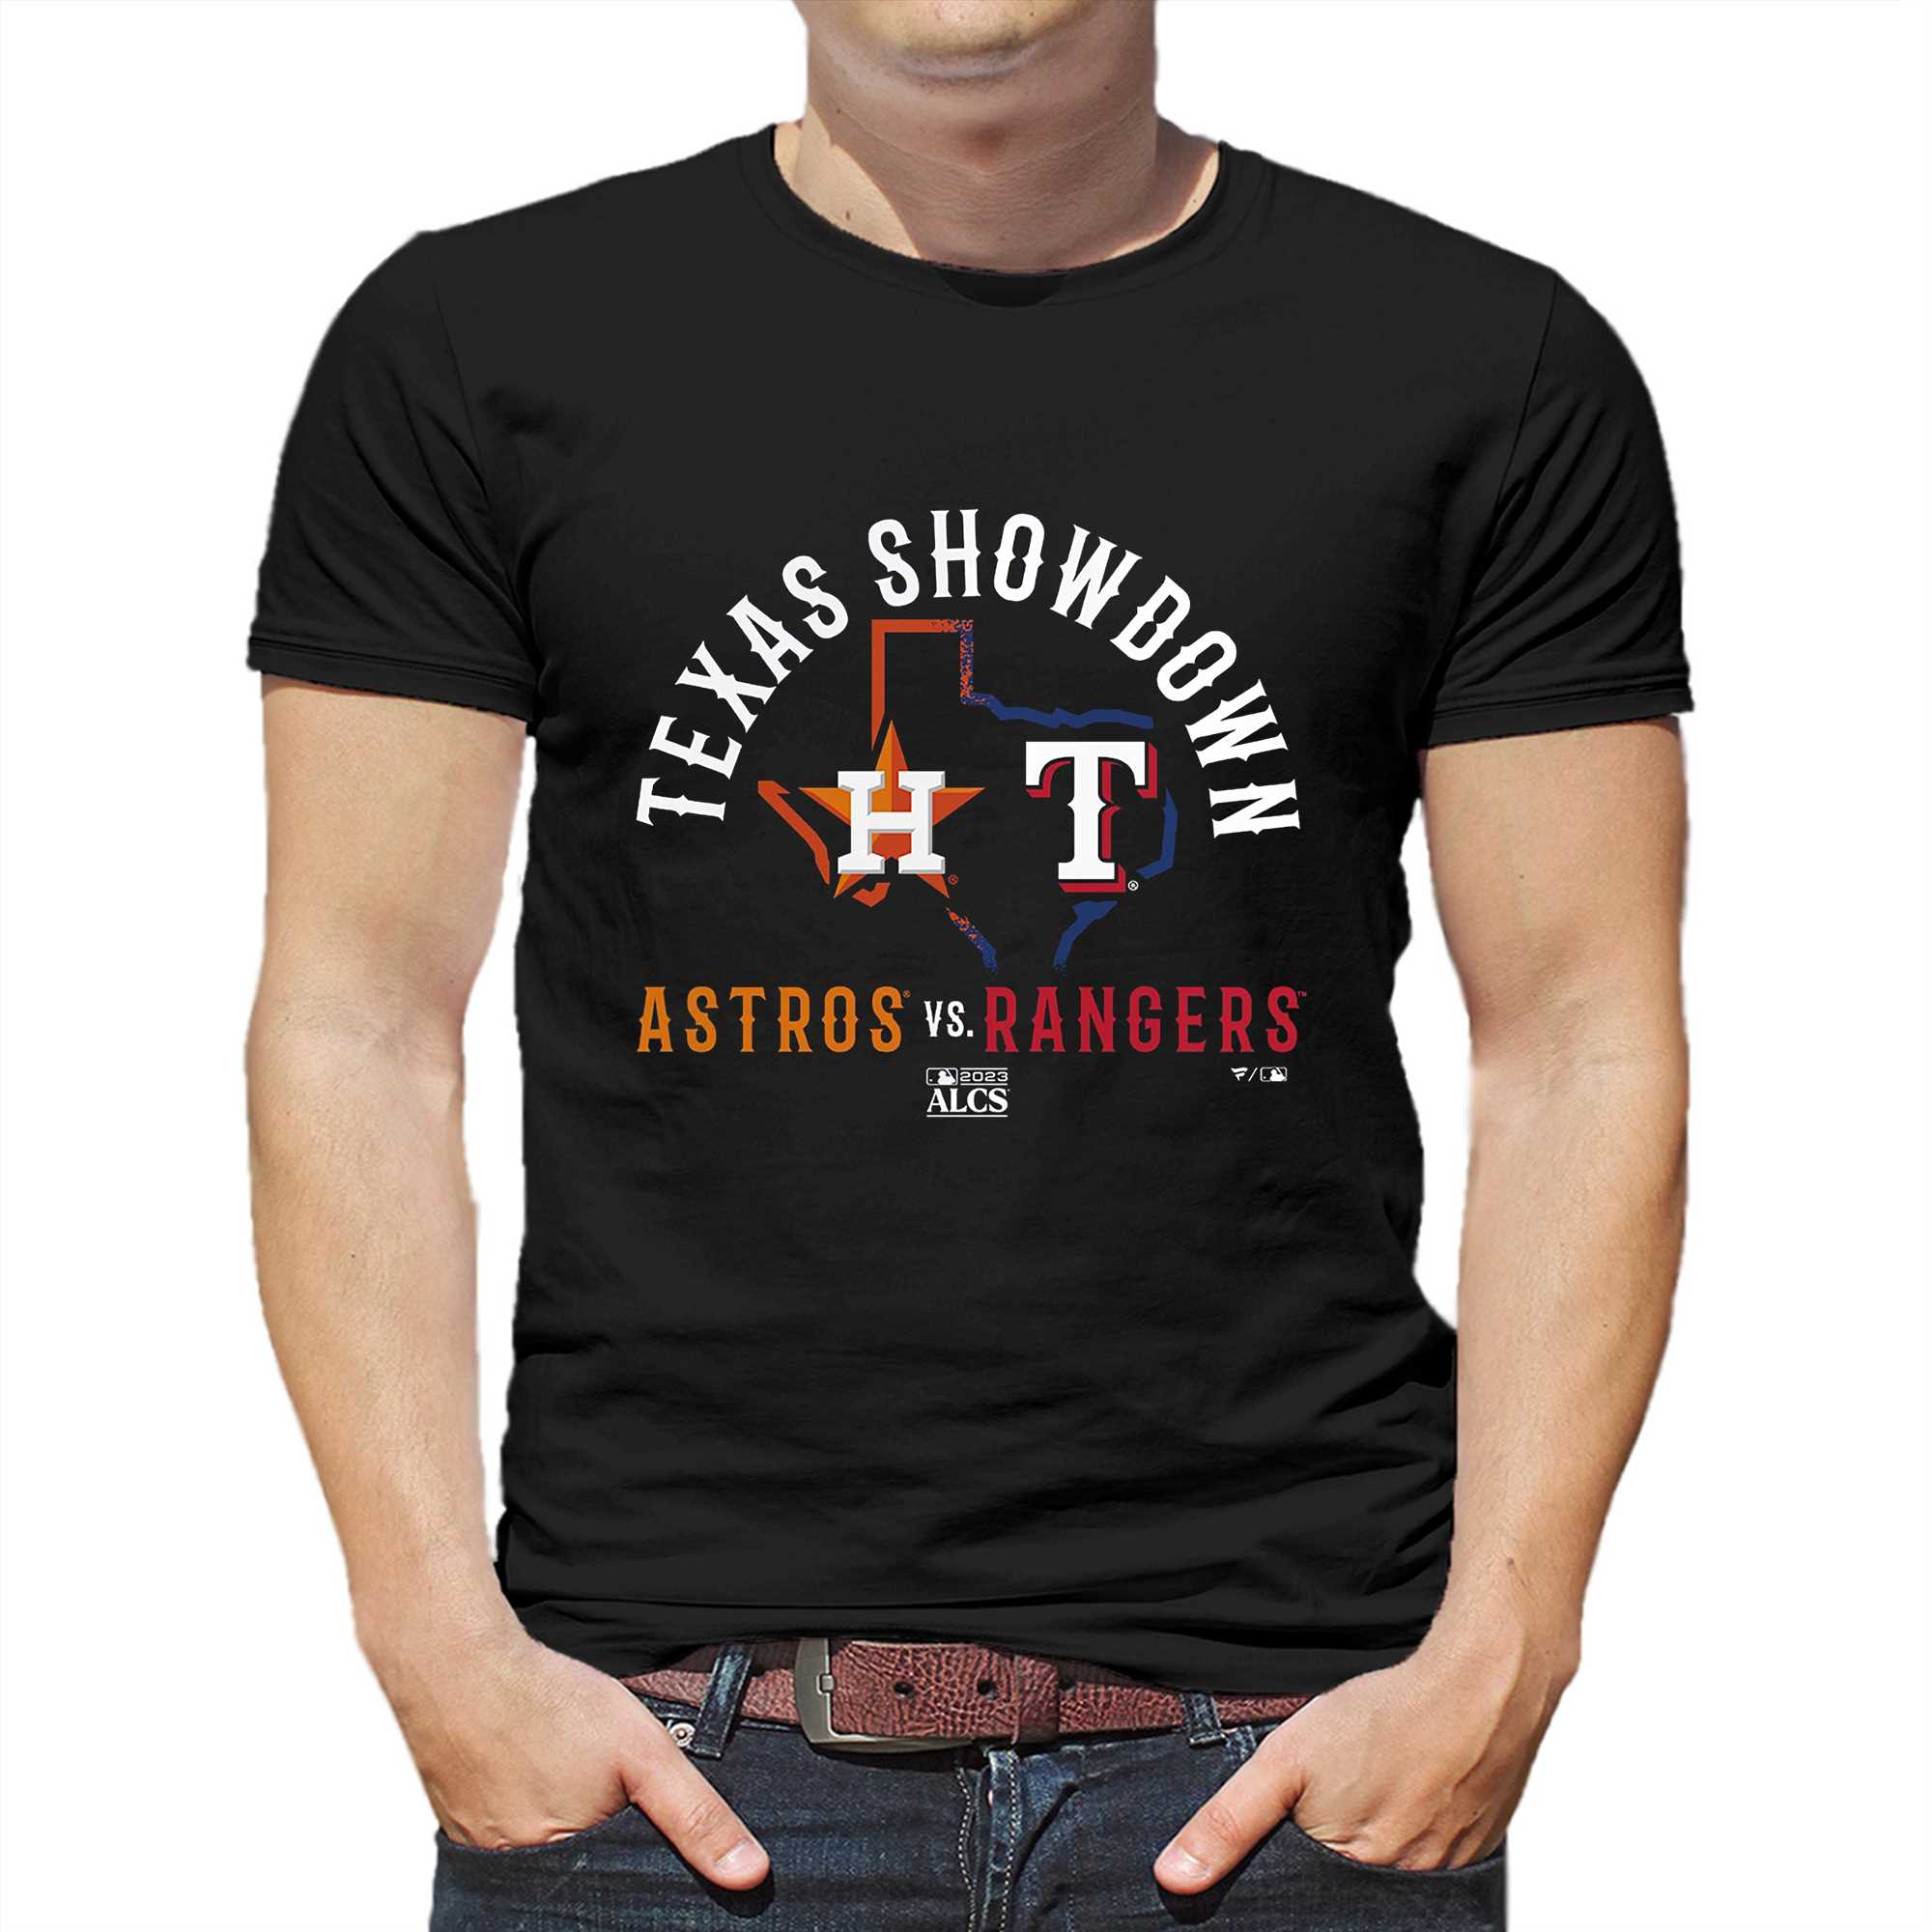 Houston Astros Alcs 2023 Shirt - Shibtee Clothing